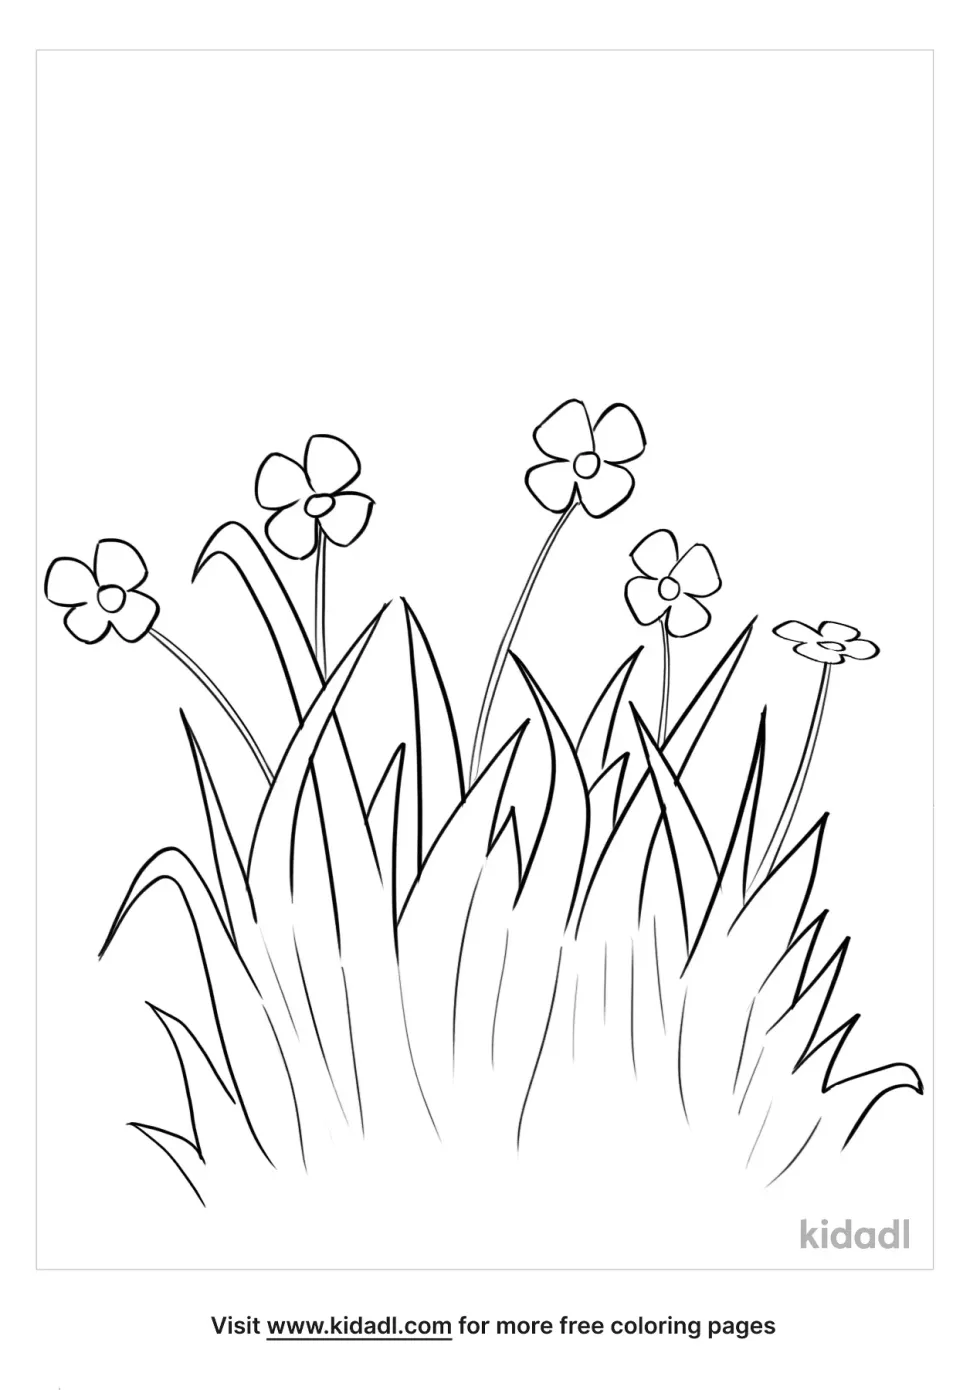 Grass And Flower